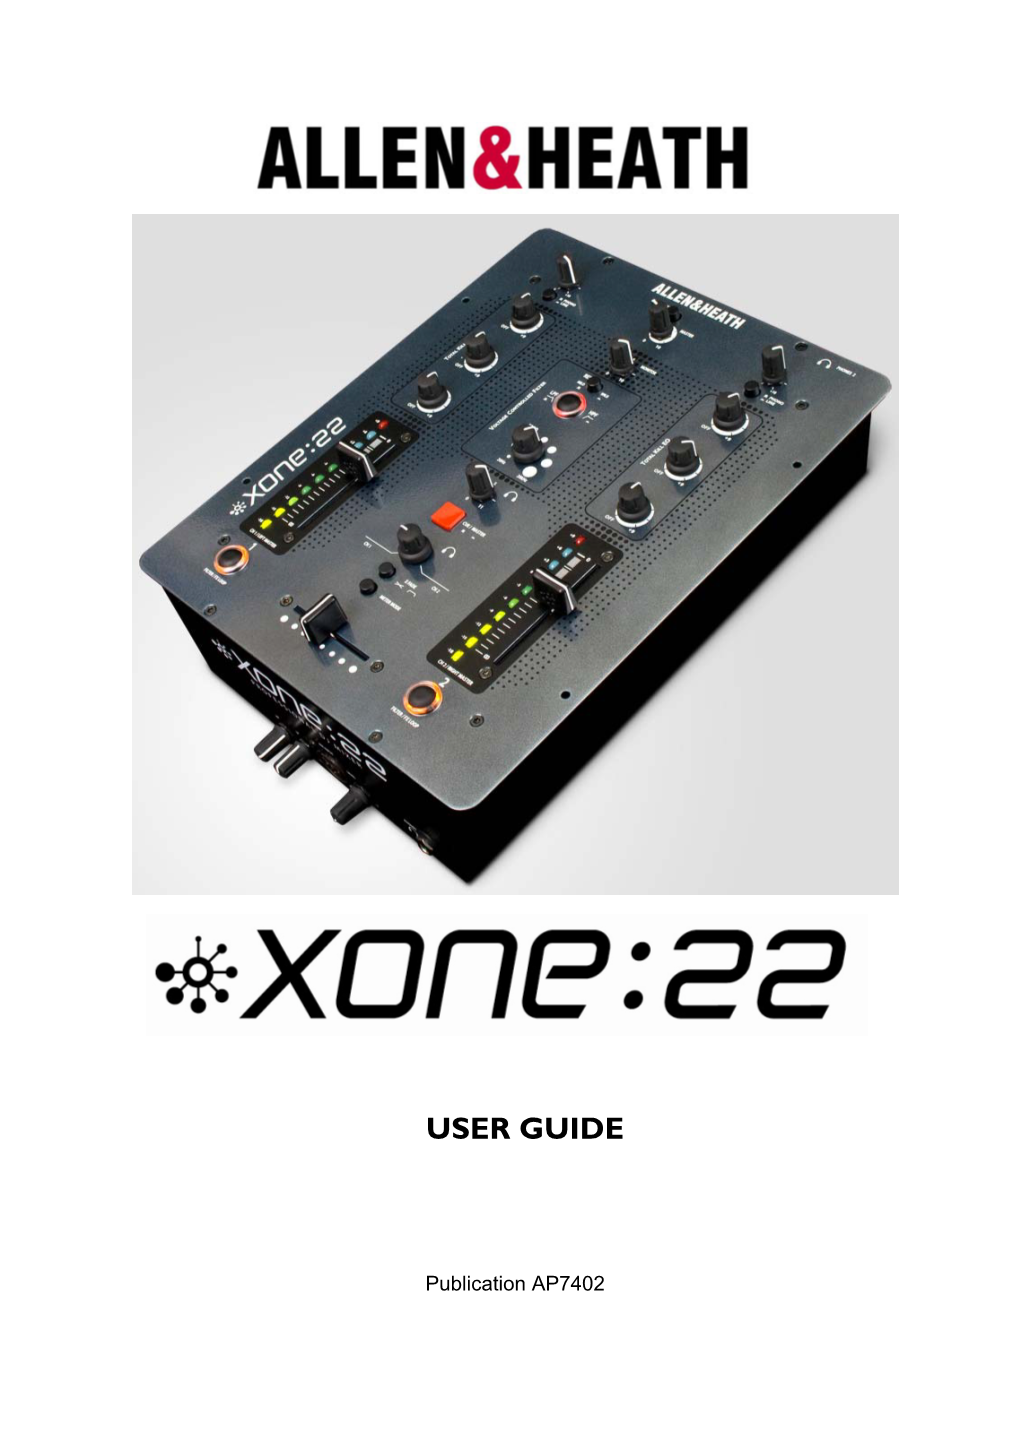 XONE:22 User Guide AP7402 Issue 1 Copyright © 2009 Allen & Heath Limited